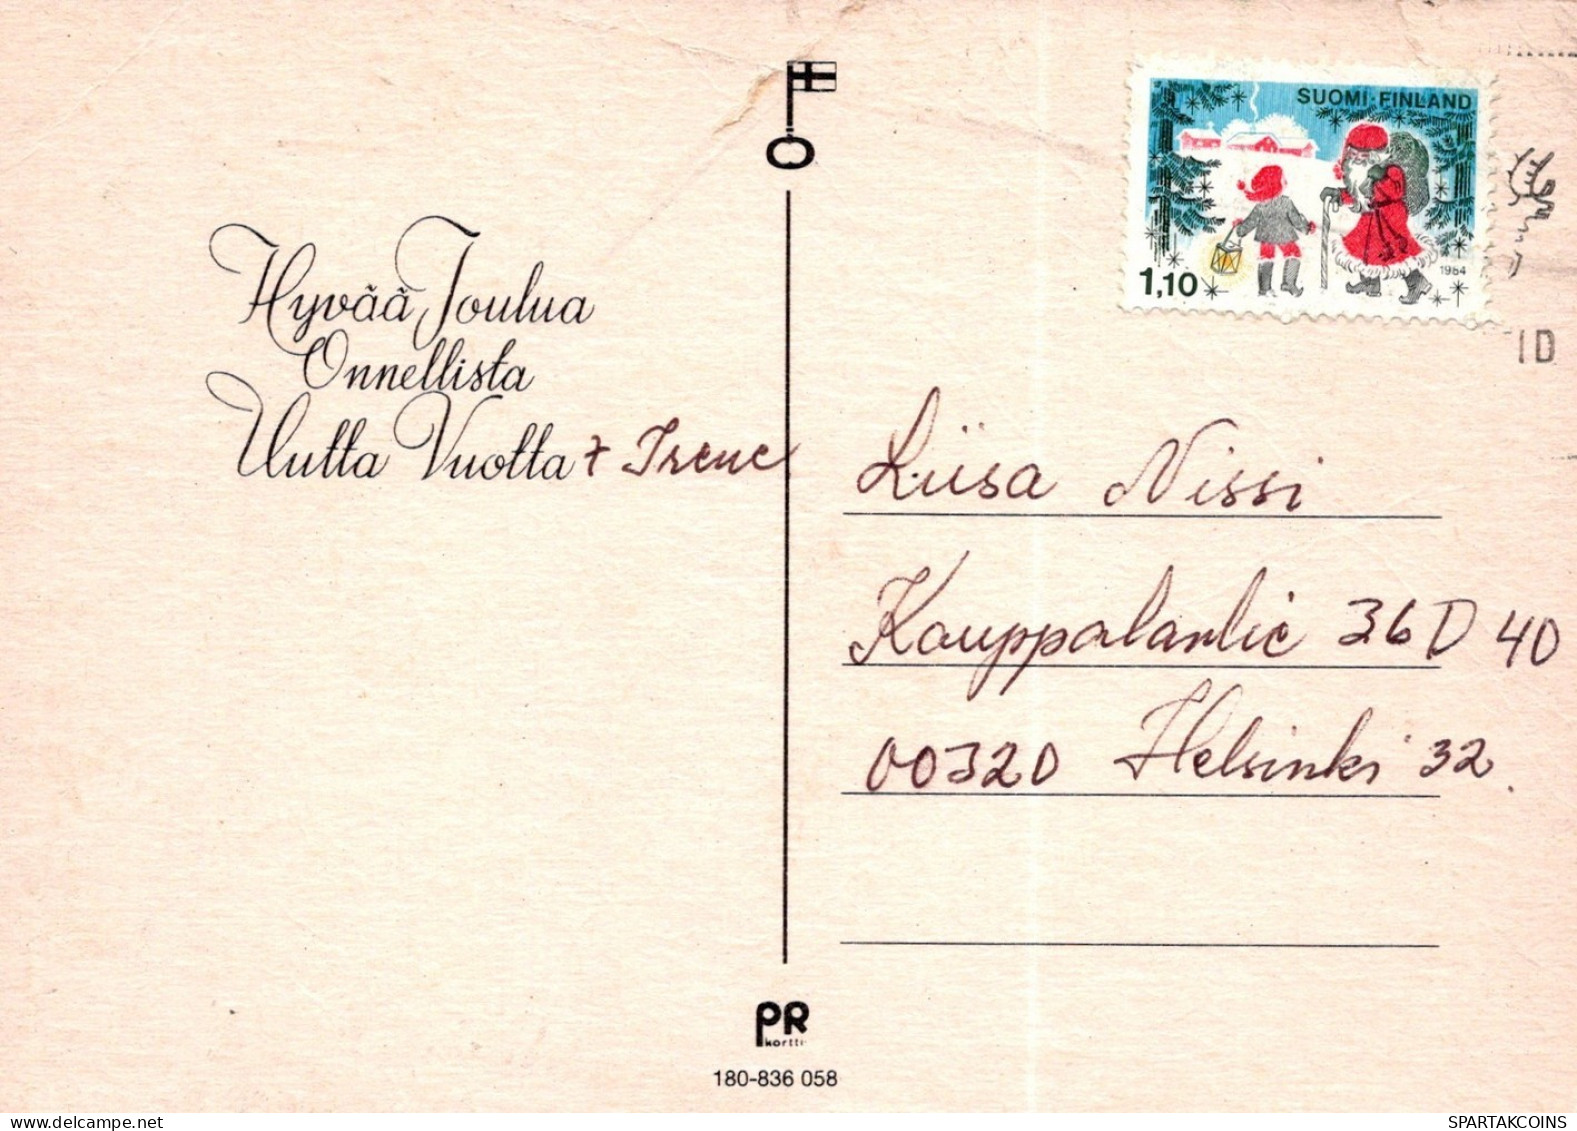 ANGELO Buon Anno Natale Vintage Cartolina CPSM #PAG990.A - Engel